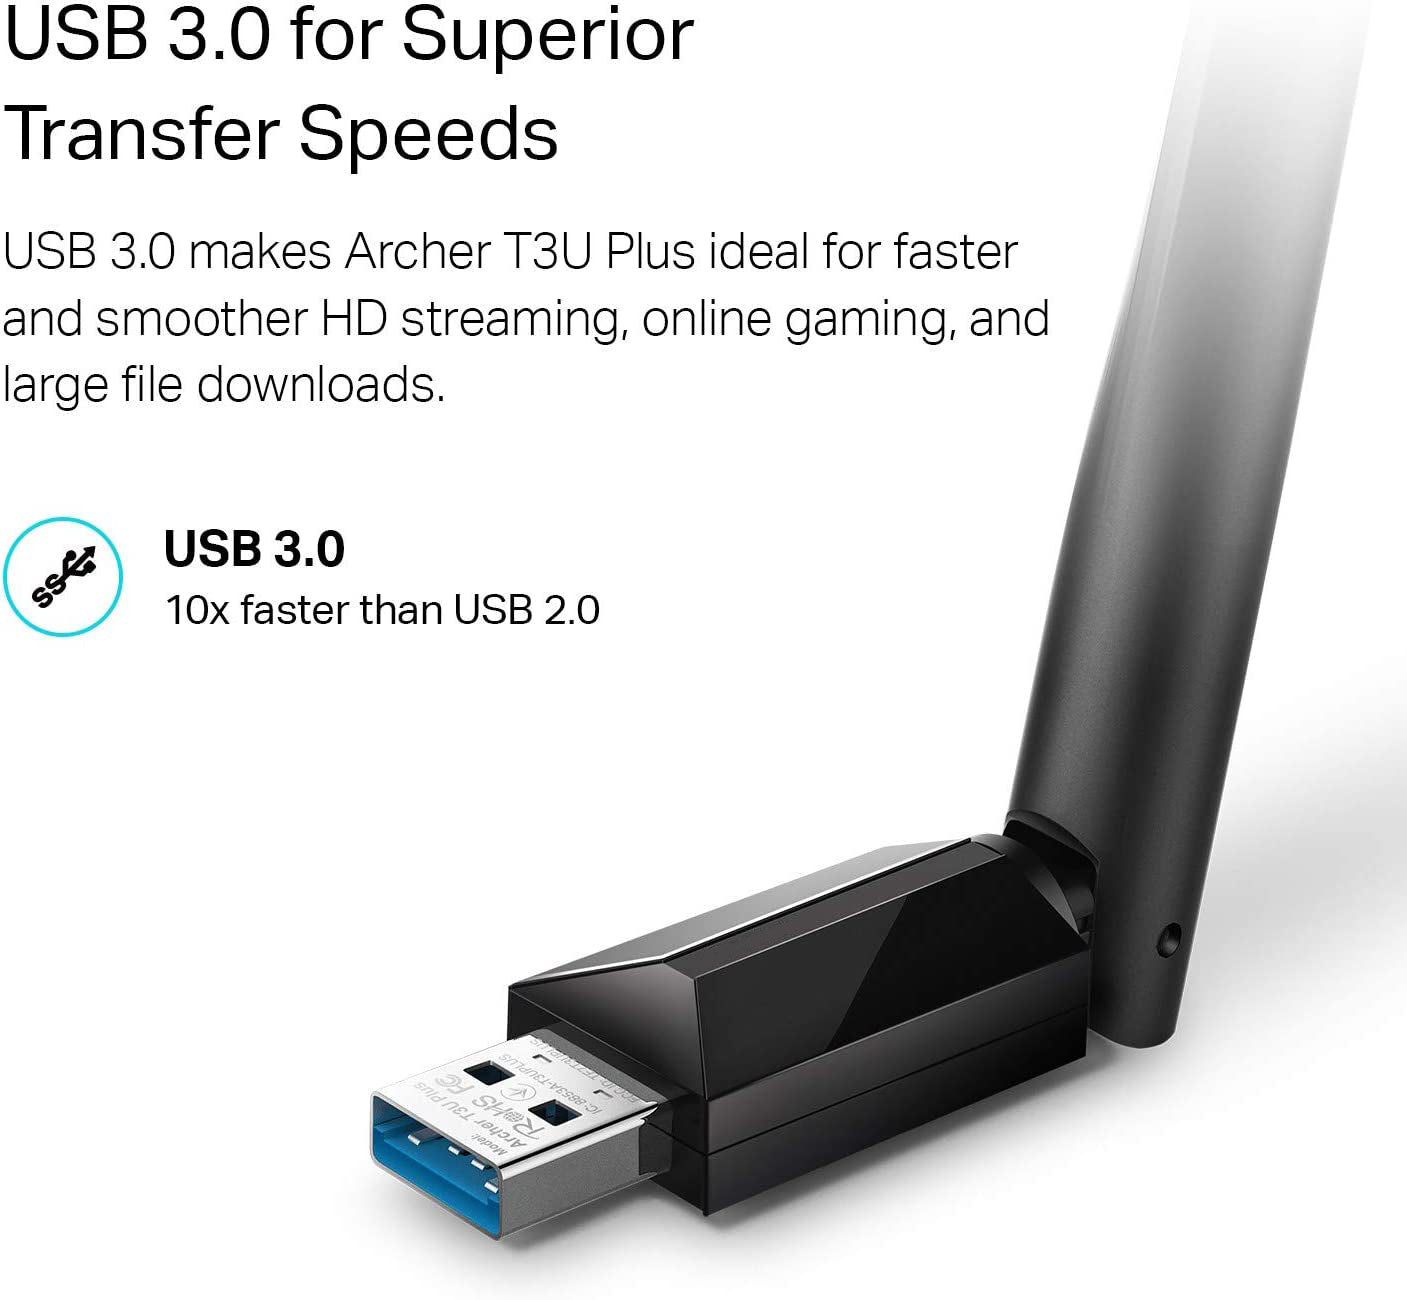 USB WiFi Adapter v2 series